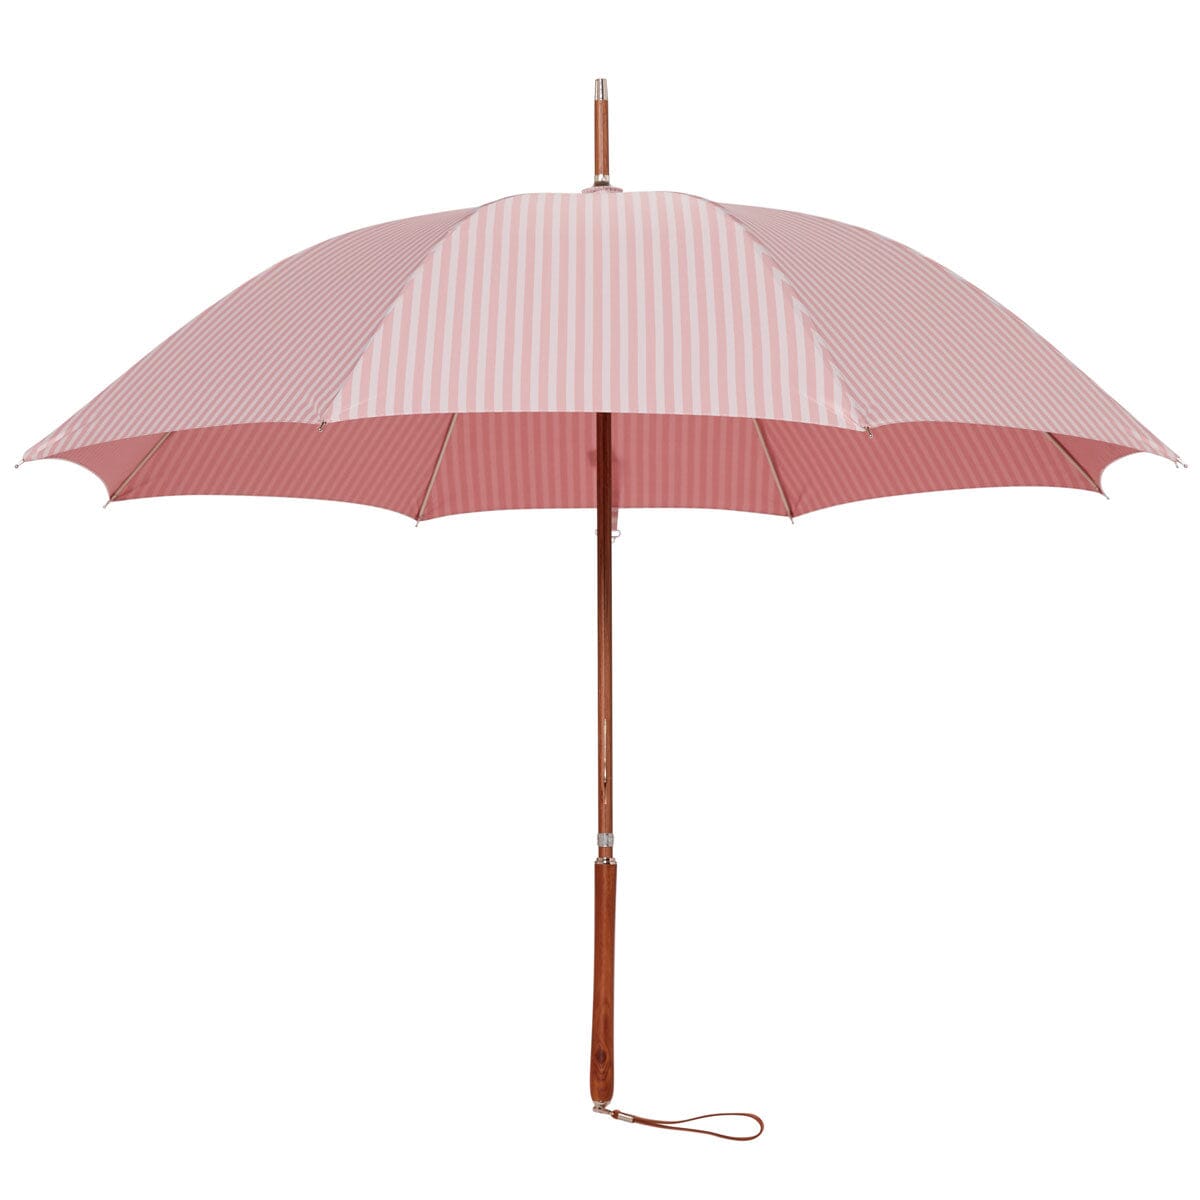 The Rain Umbrella - Lauren's Pink Stripe